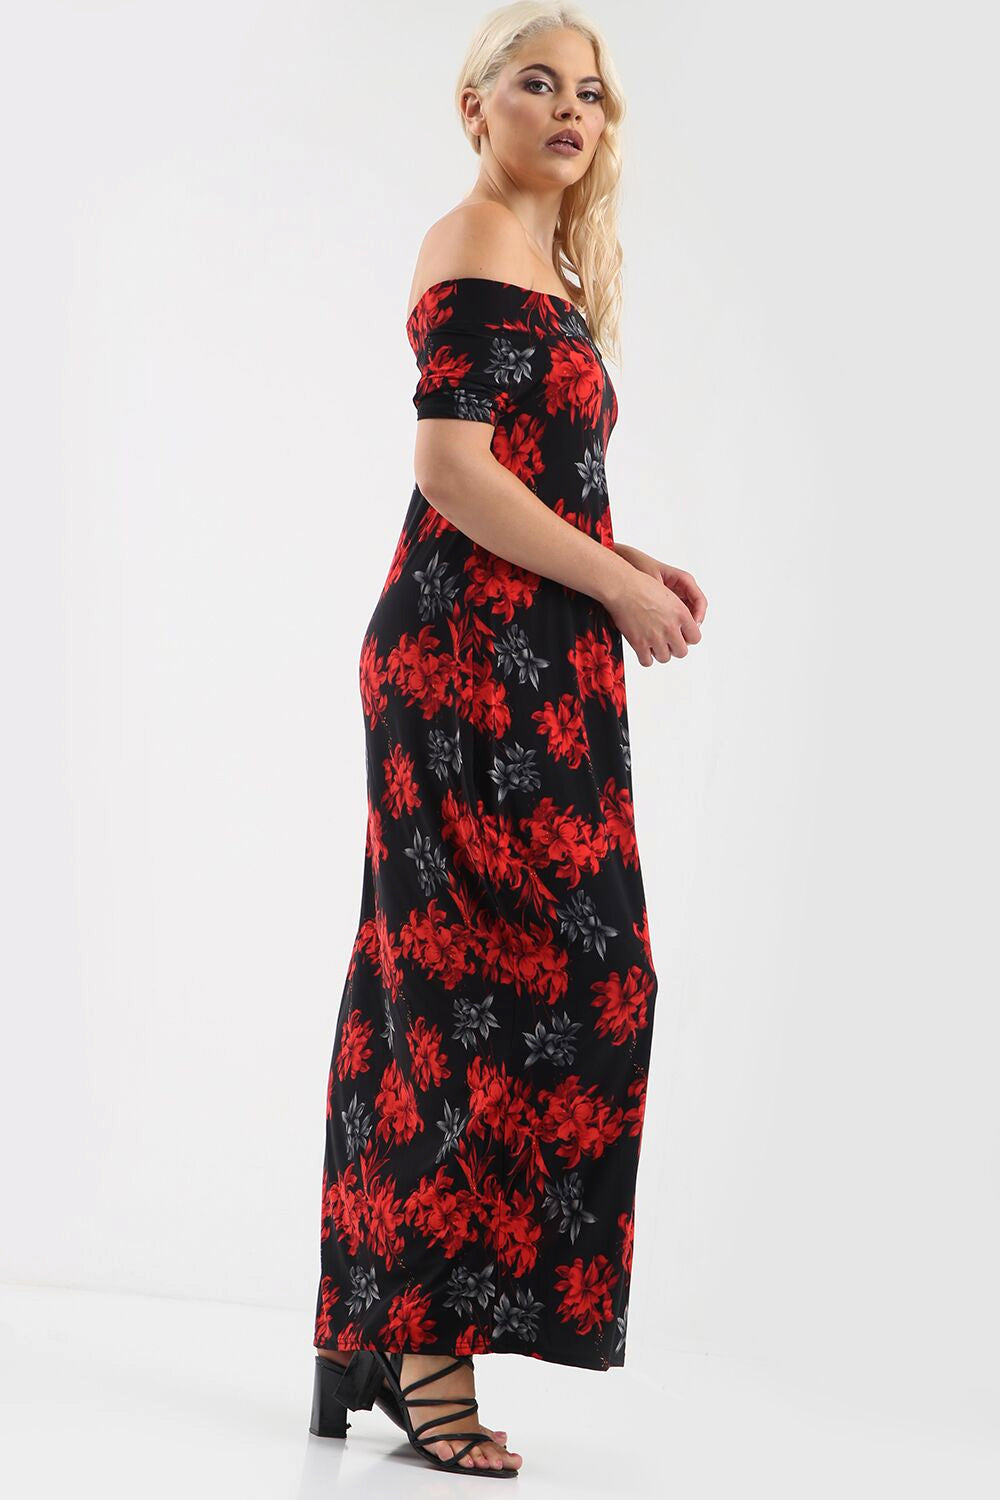 Black Off Shoulder Red Floral Print Maxi Dress - bejealous-com